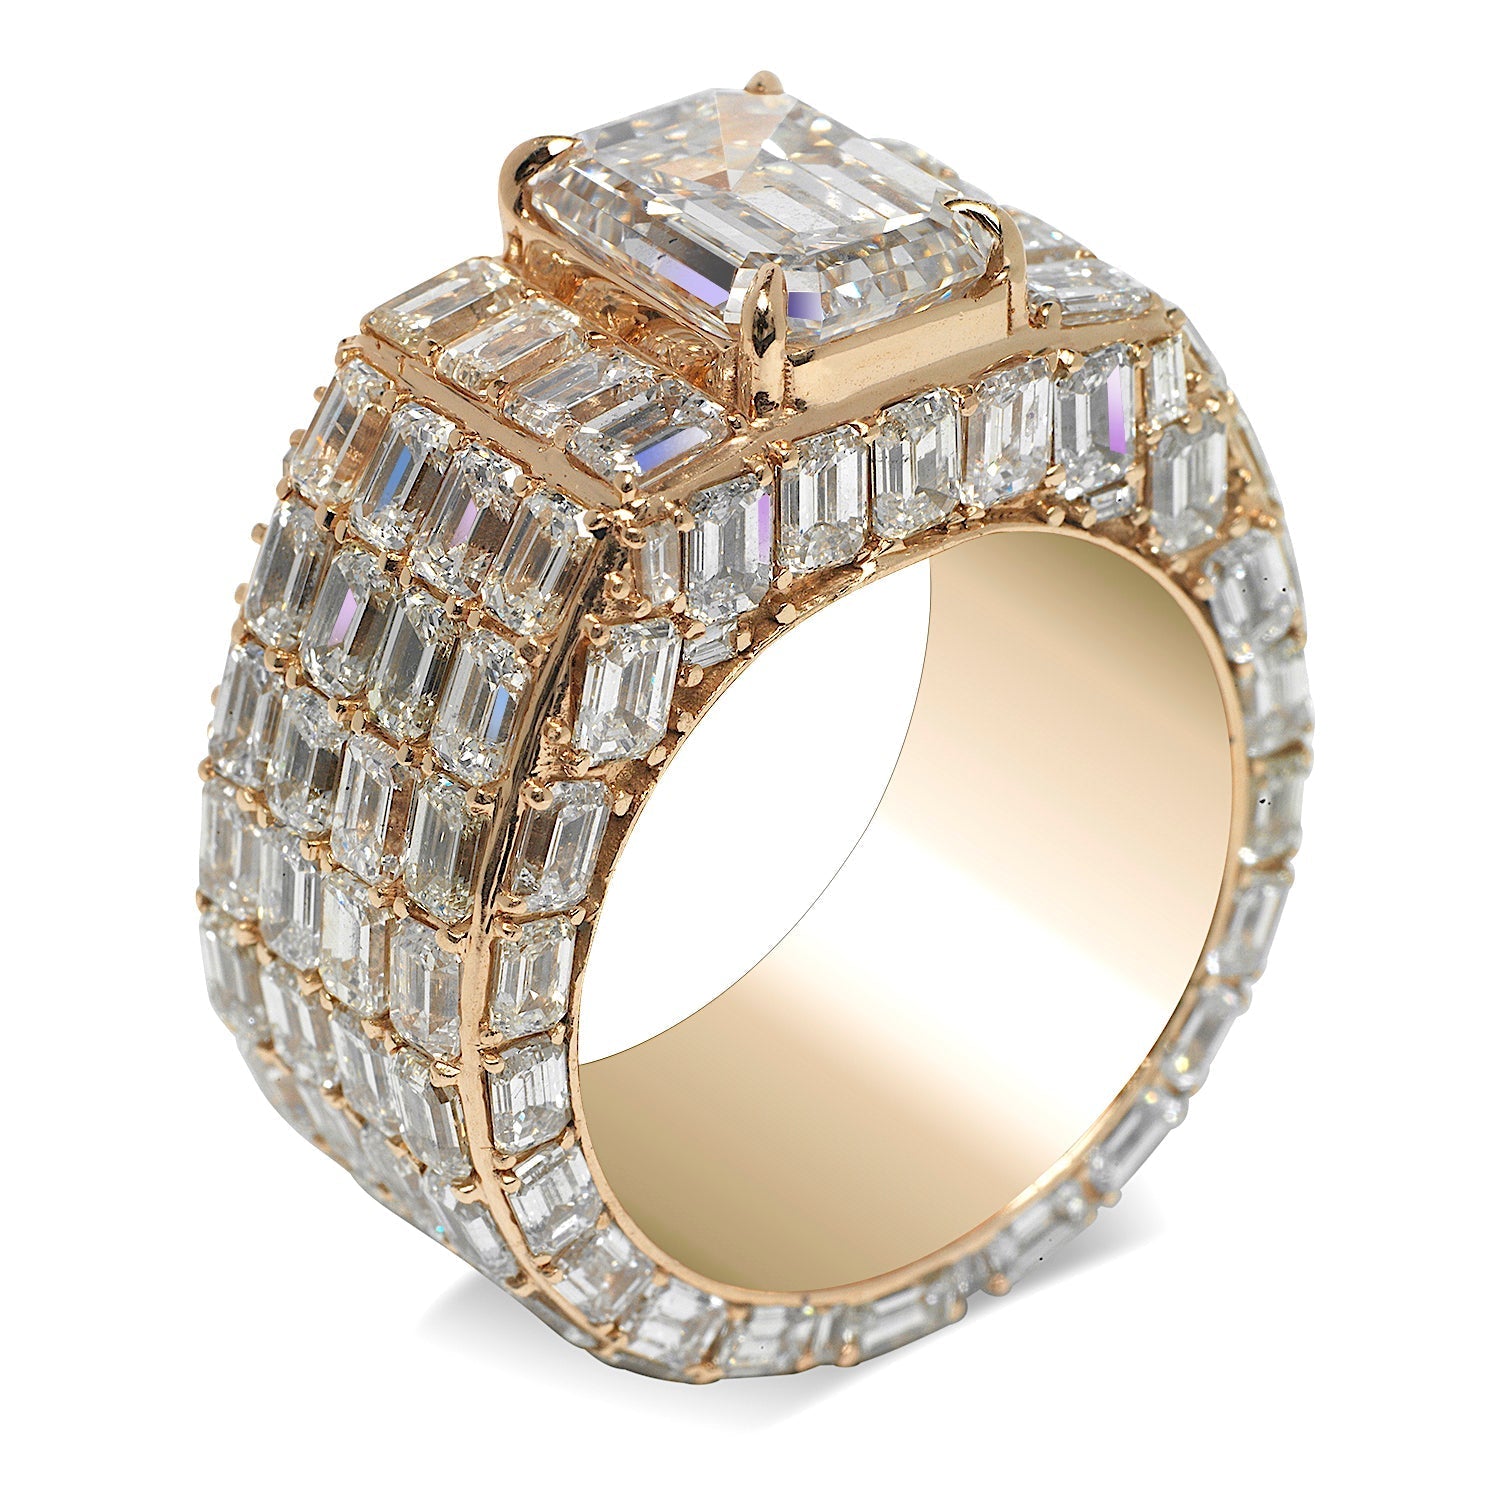 SZUL 1 CTW Men's Genuine Diamond Solitaire Ring in 10K White Gold|Amazon.com